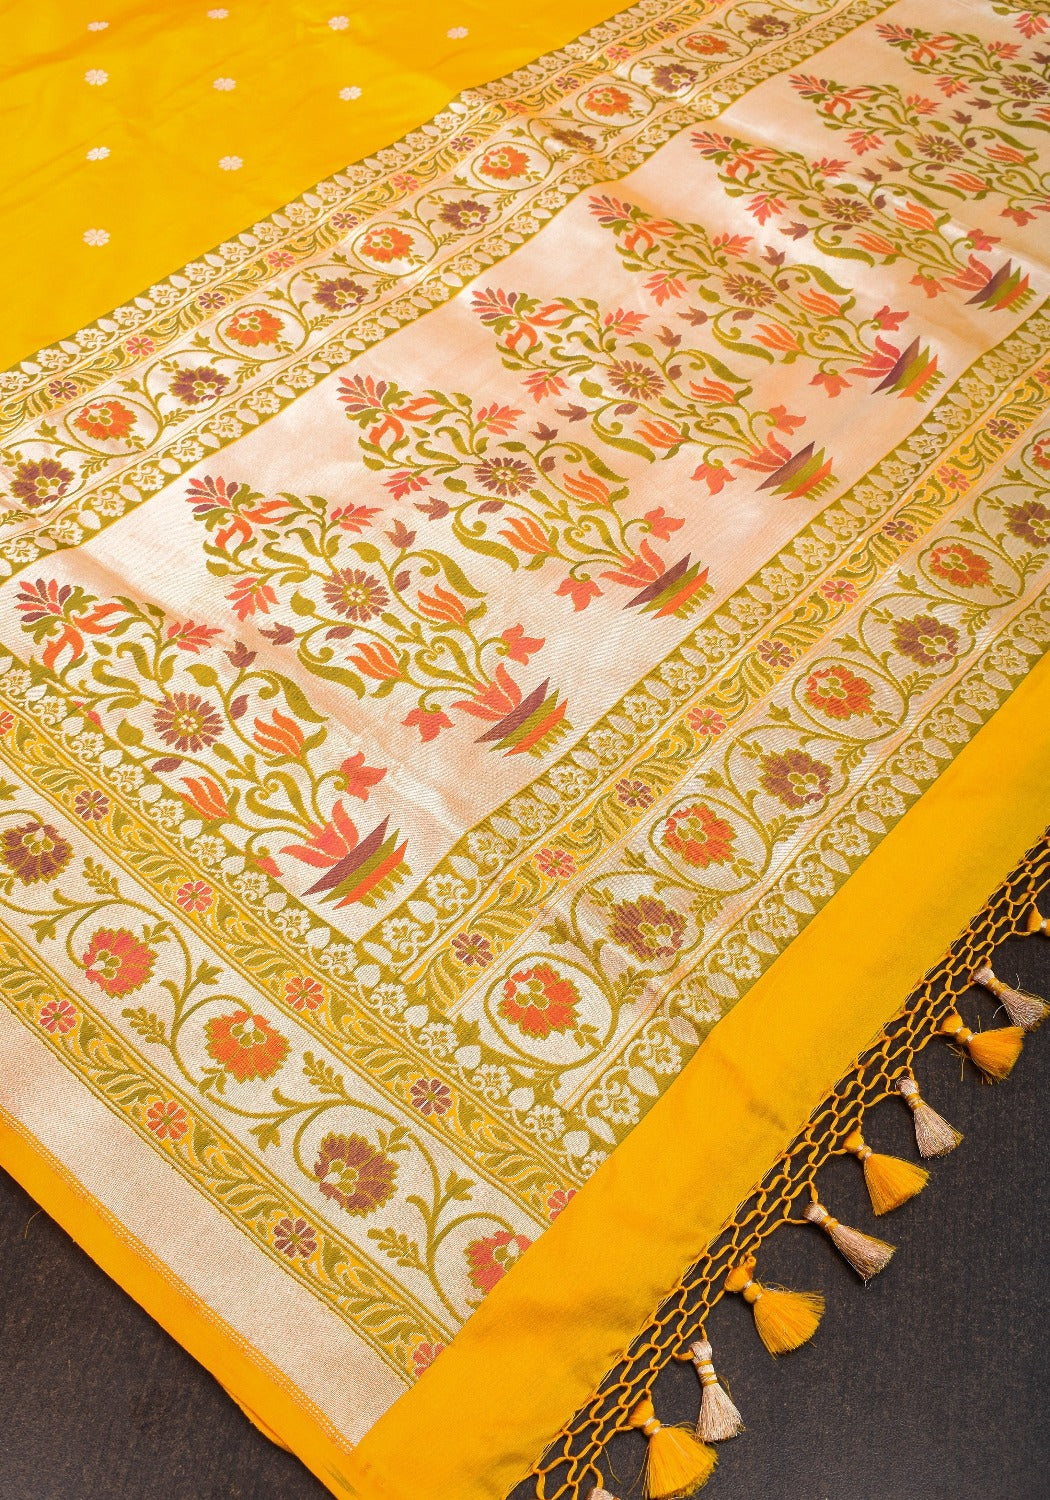 Exquisite Banarasi Katan Silk Saree in Yellow with Paithani Style Border | SILK MARK CERTIFIED